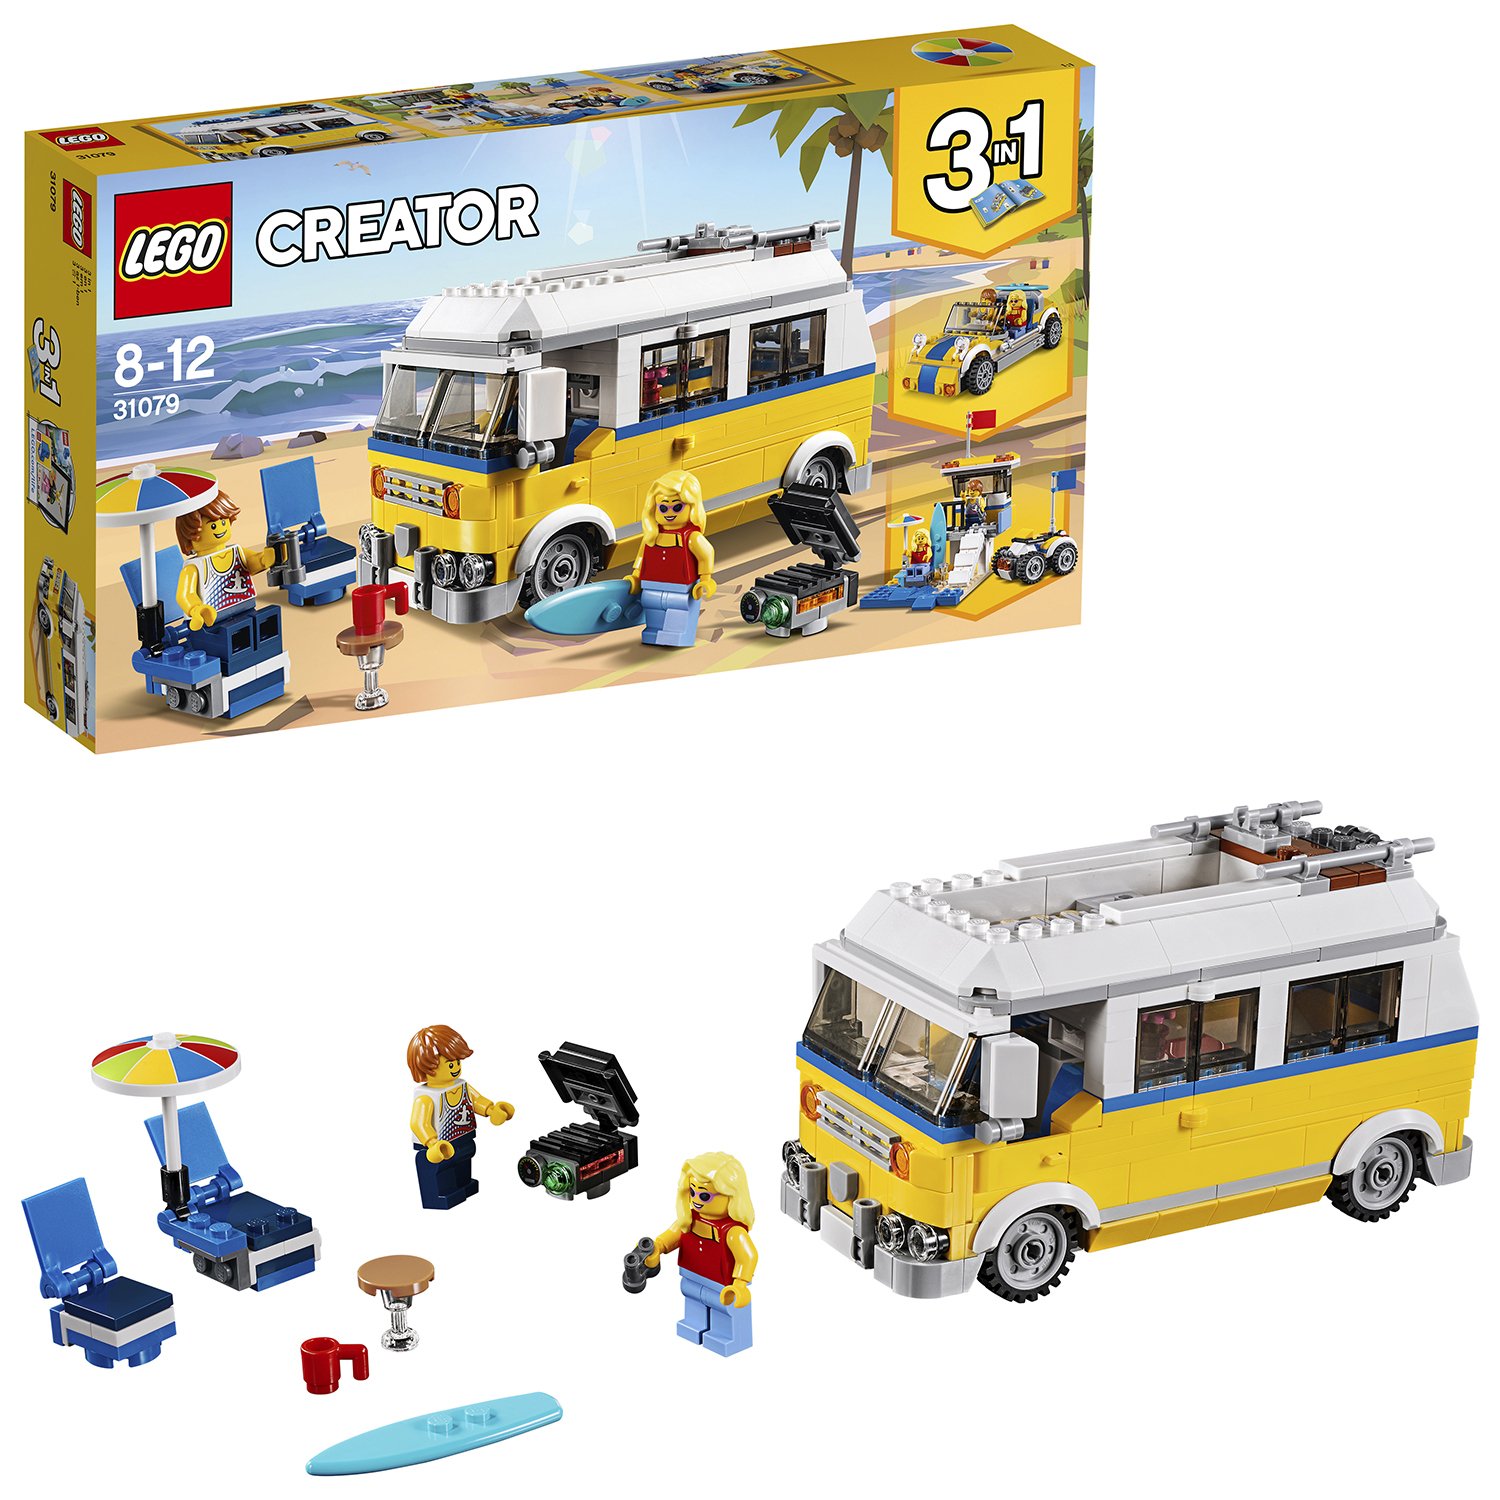 LEGO CREATOR Sunshine Surfer Van Construction Toy - 31079